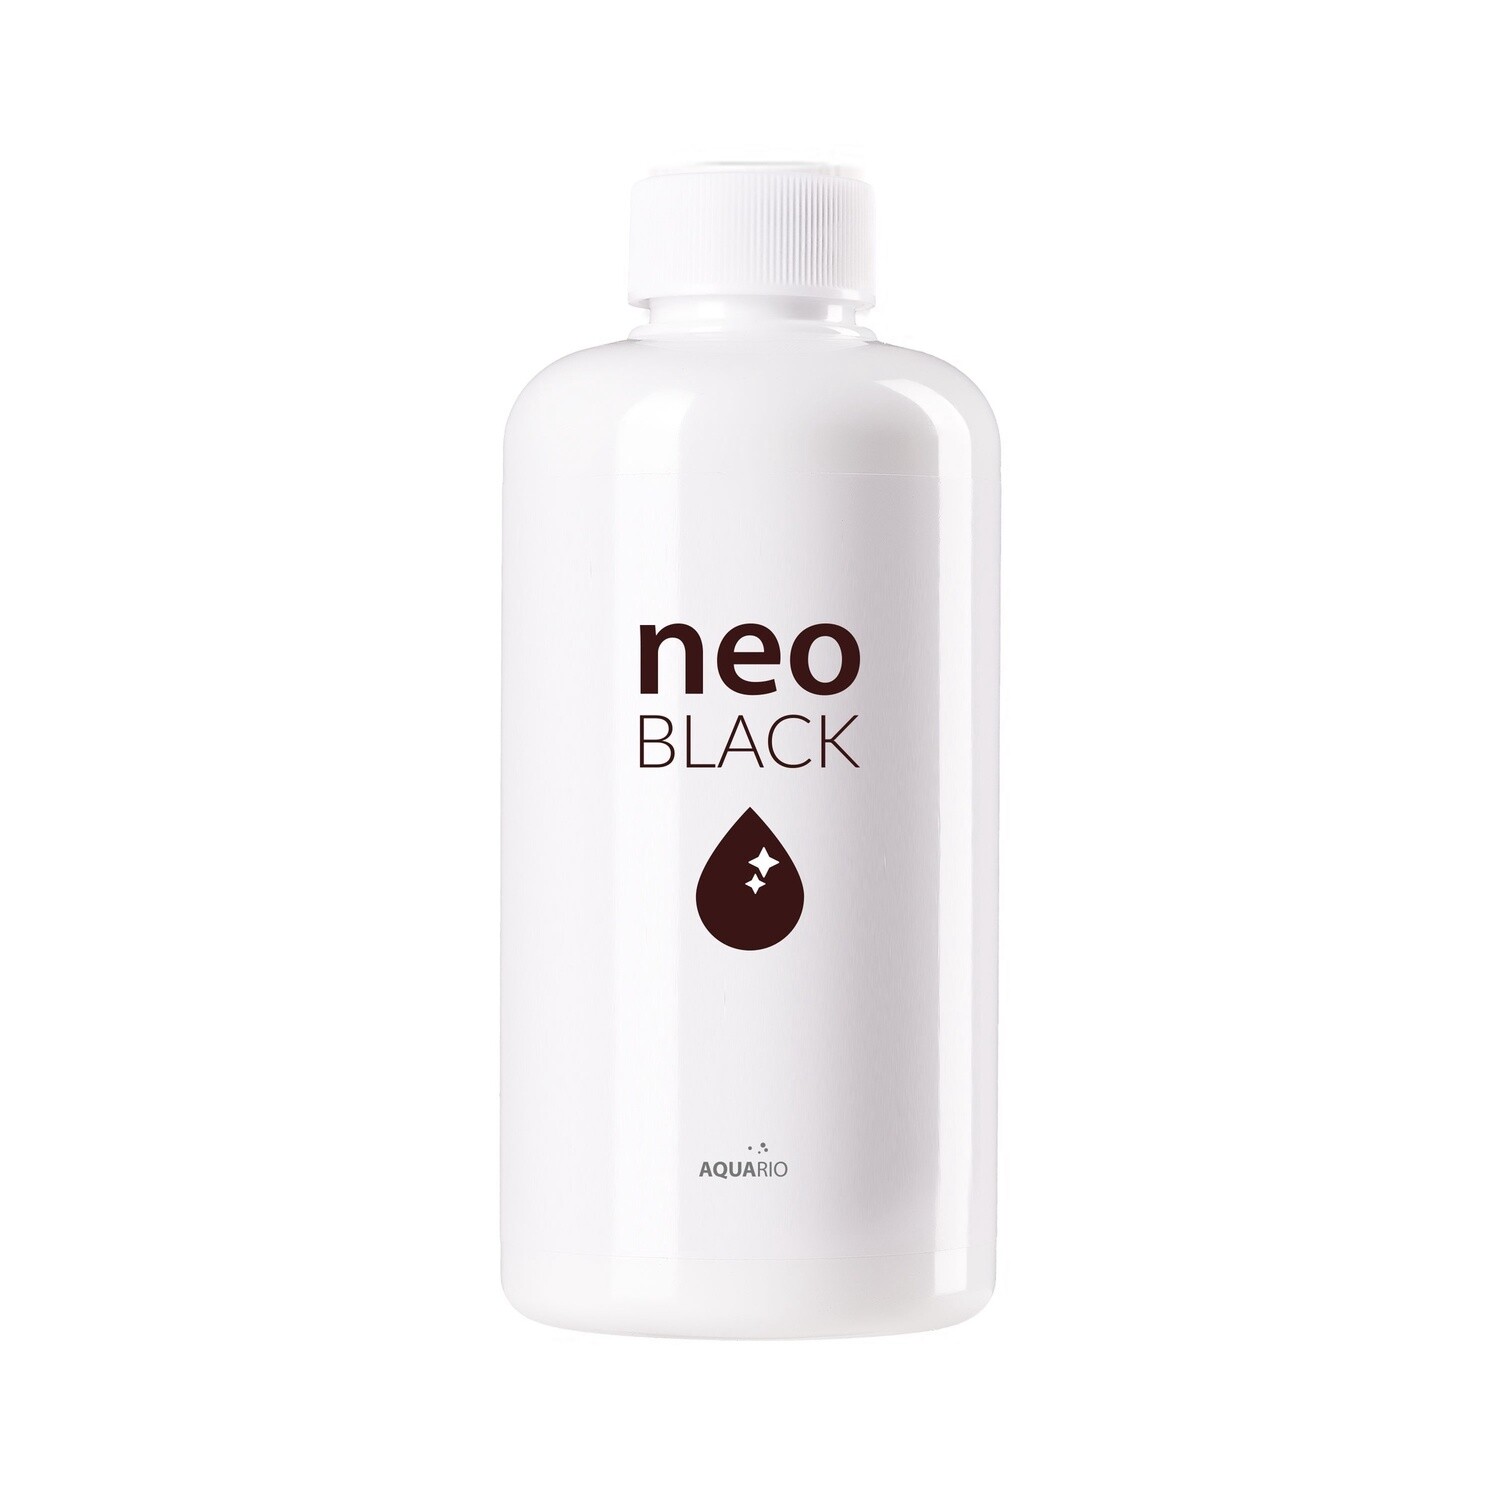 Neo Black, volume: Neo Black 300ml